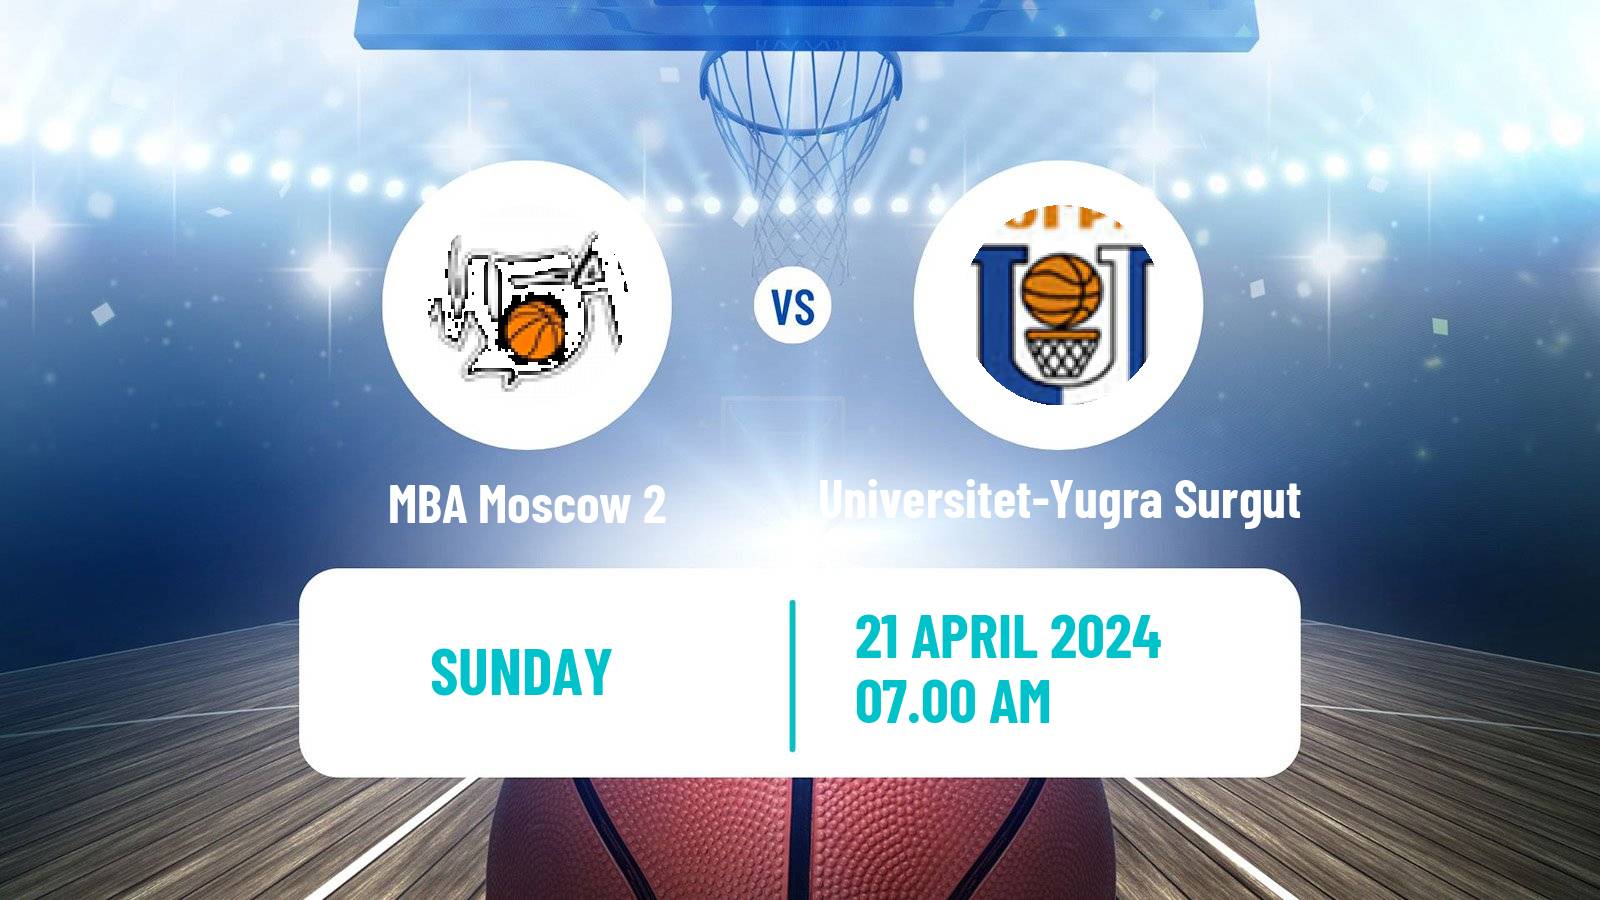 Basketball Russian Super League Basketball MBA Moscow 2 - Universitet-Yugra Surgut